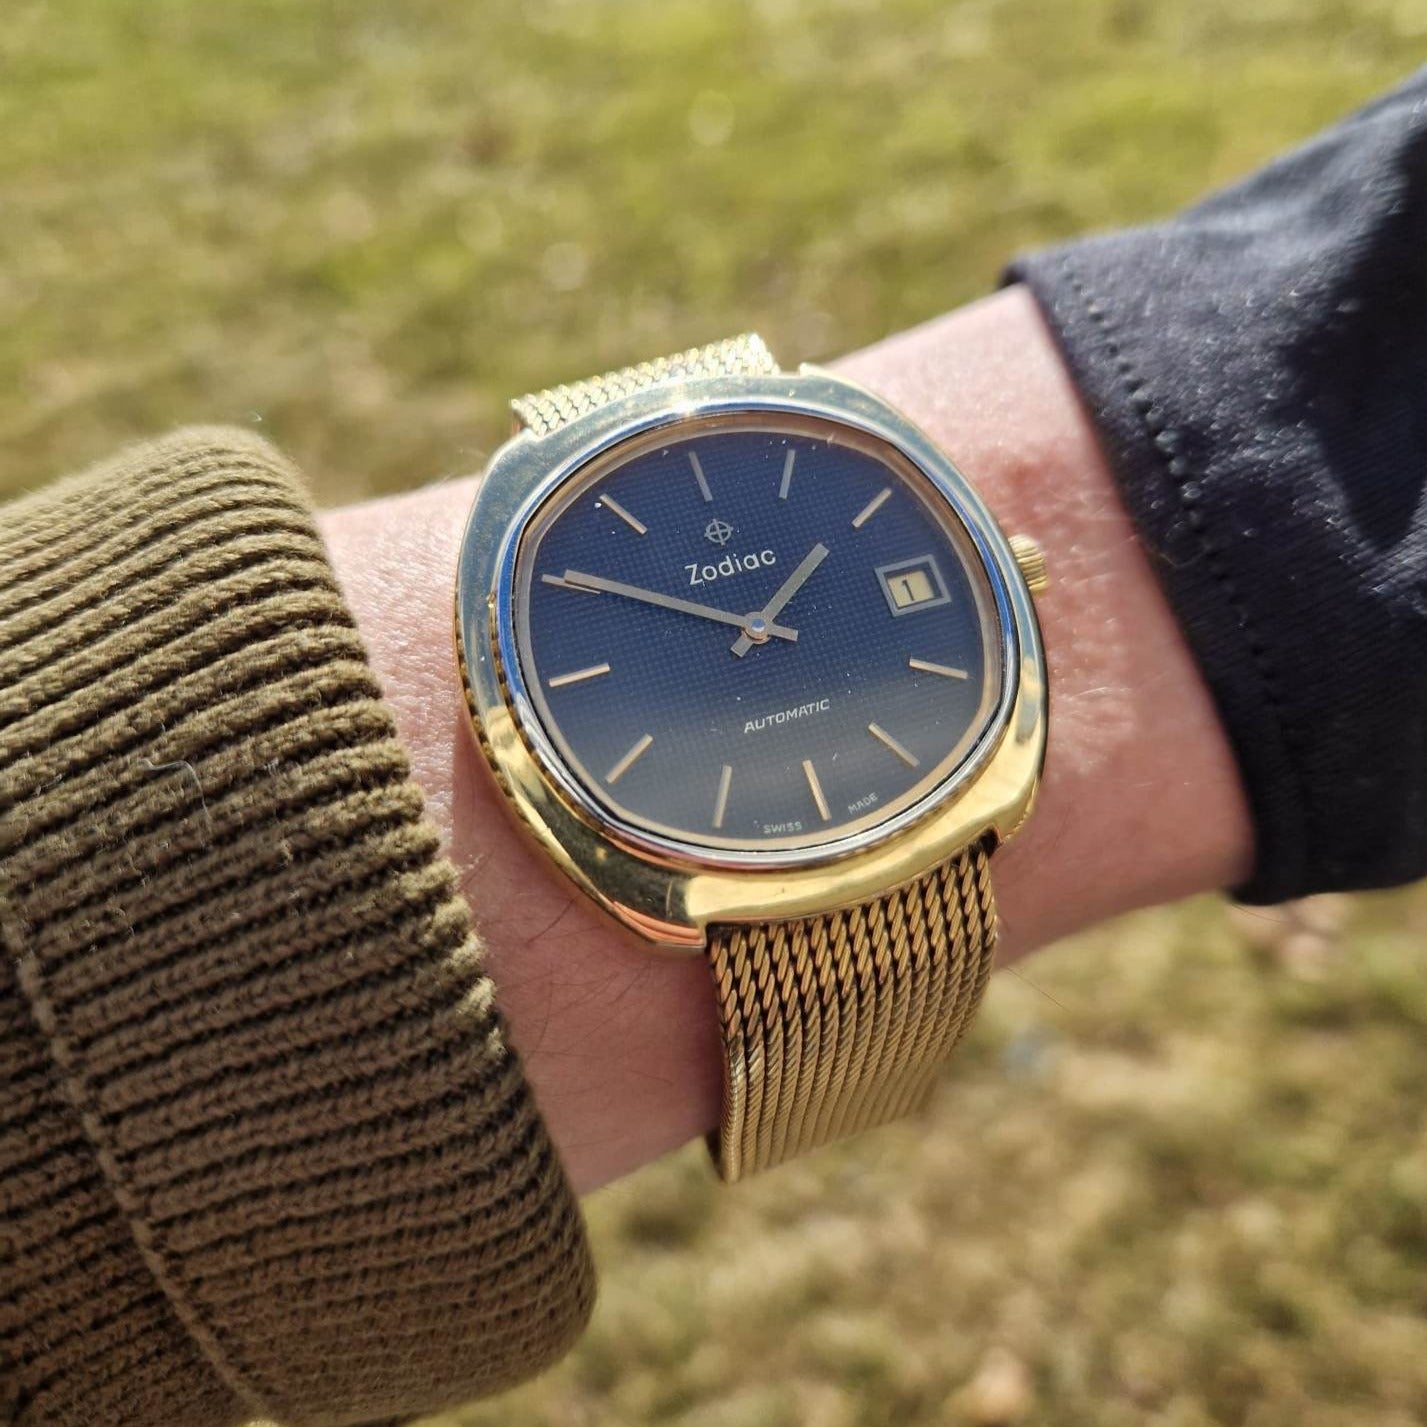 Vintage Zodiac Gold Watch on Wrist, Cal. LTD 104 2892, 1960s Swiss Automatic Timepiece, Tapisserie Dial, 21 Jewels, Men's Luxury Dress/Formal Accessory